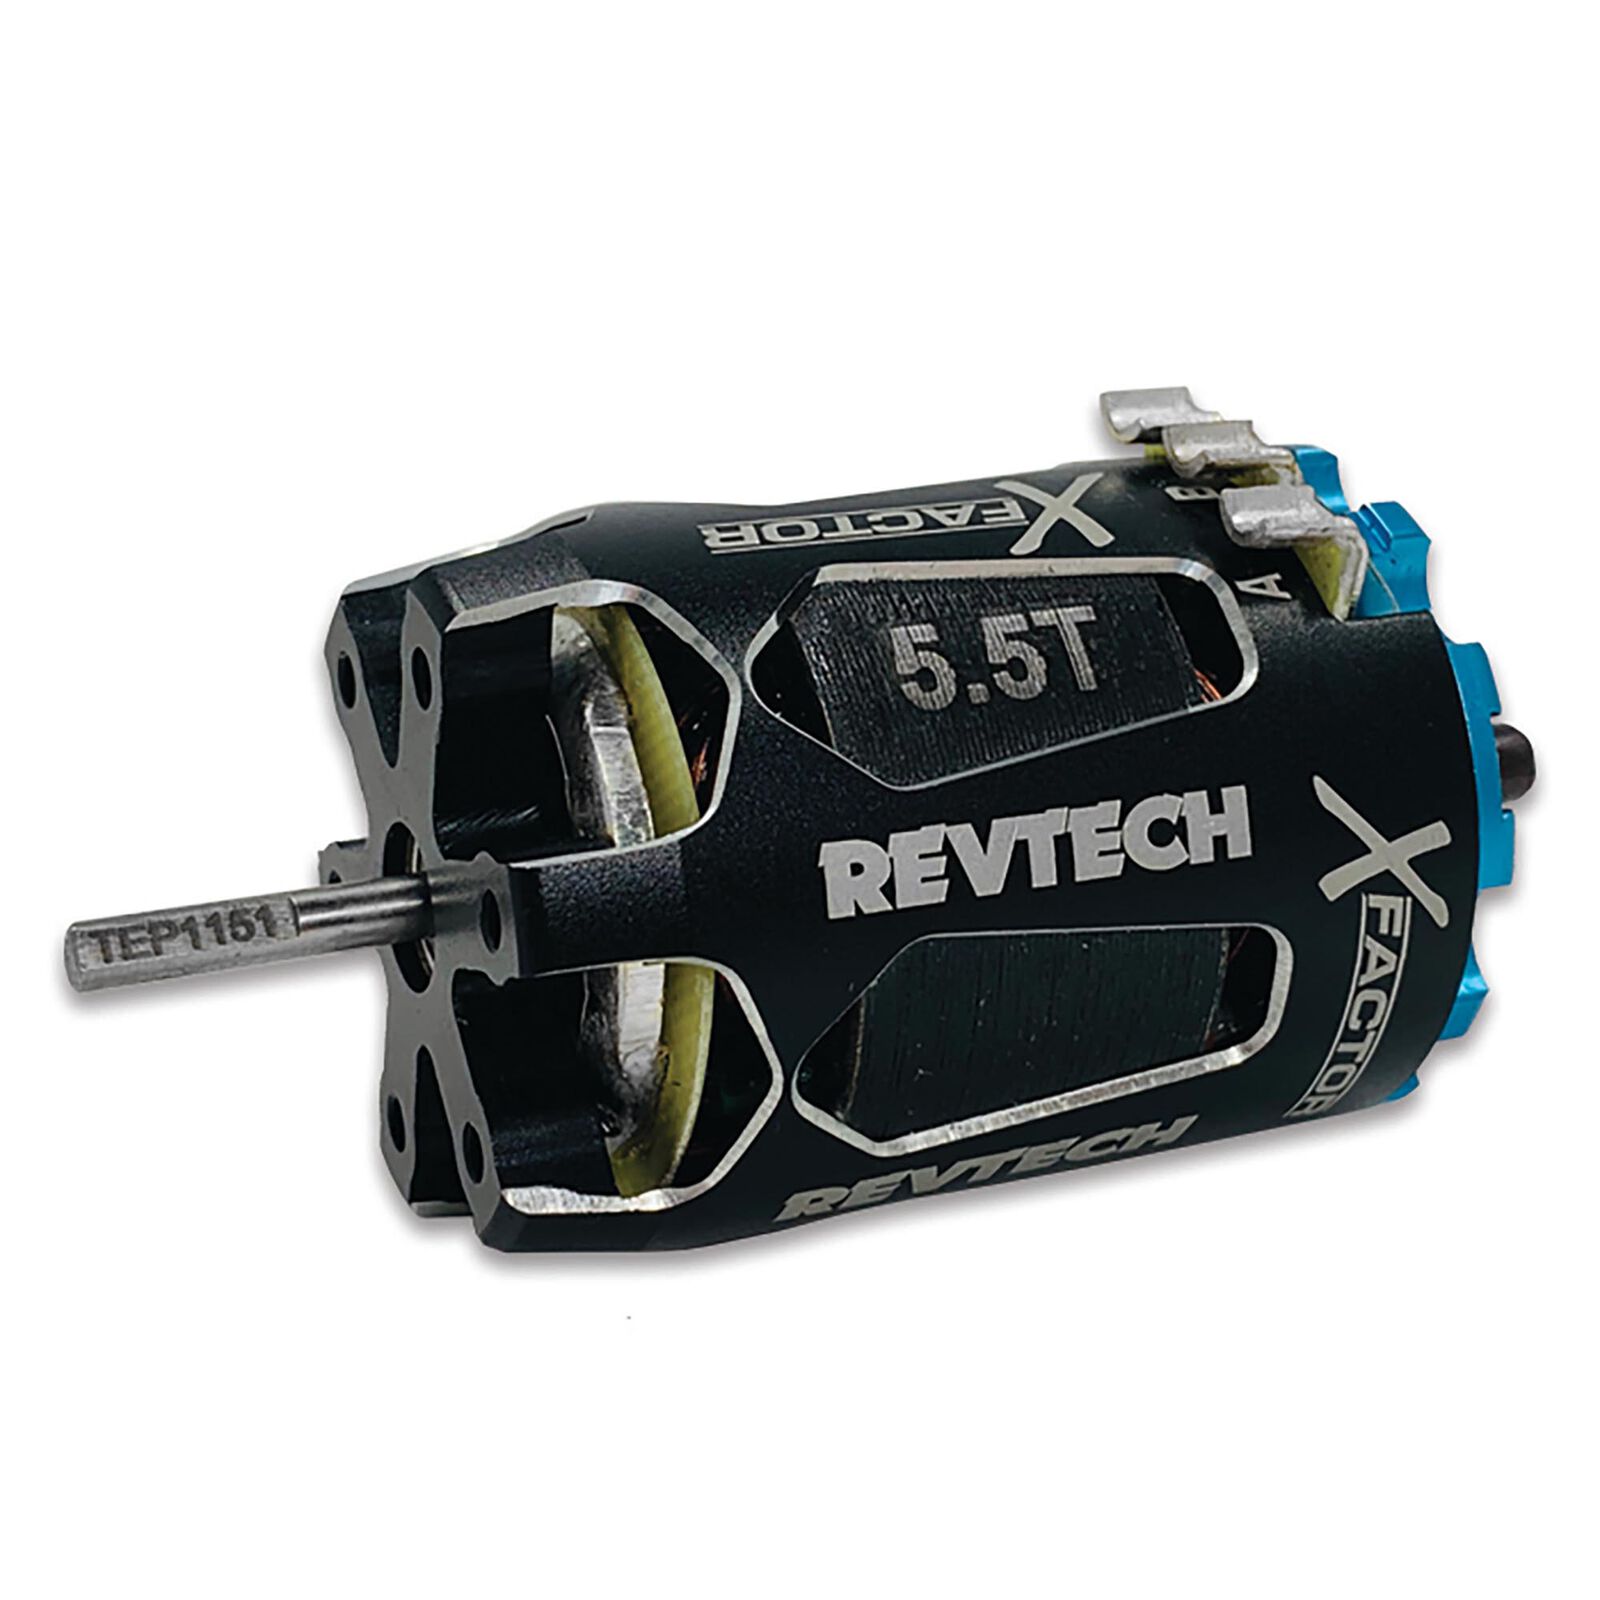 Revtech X-Factor 5.5T Modified Brushless Motor